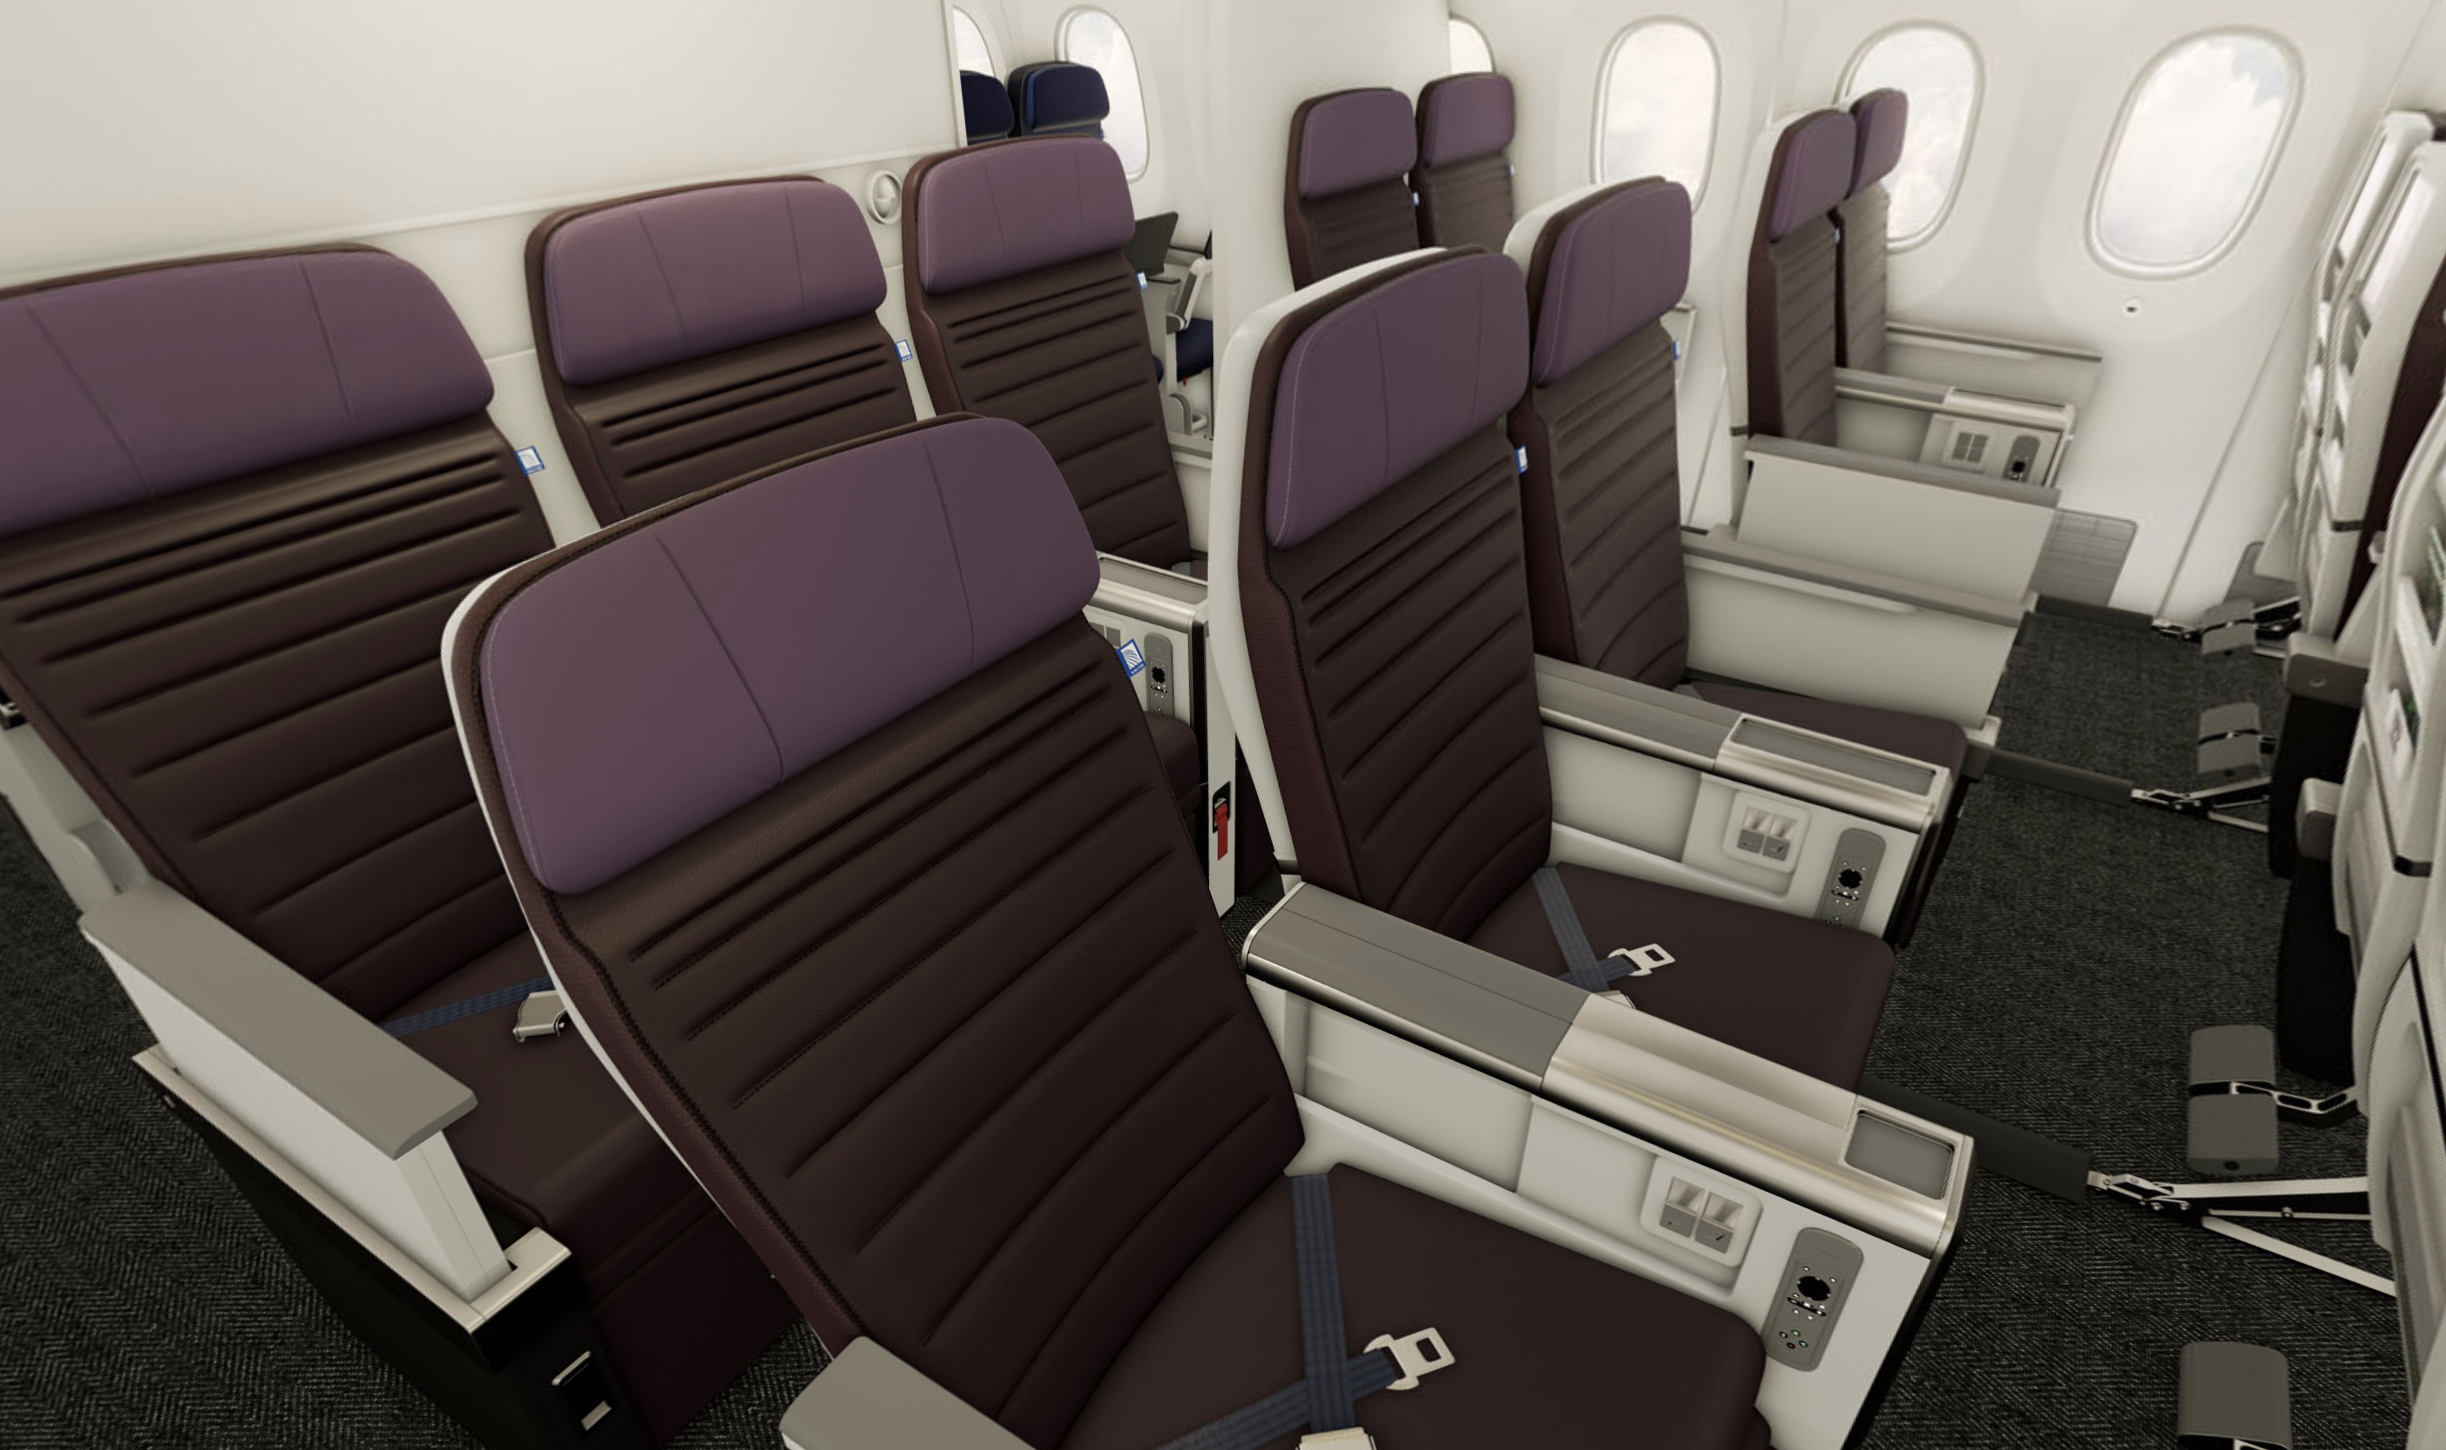 United Premium Economy seats and cabin.